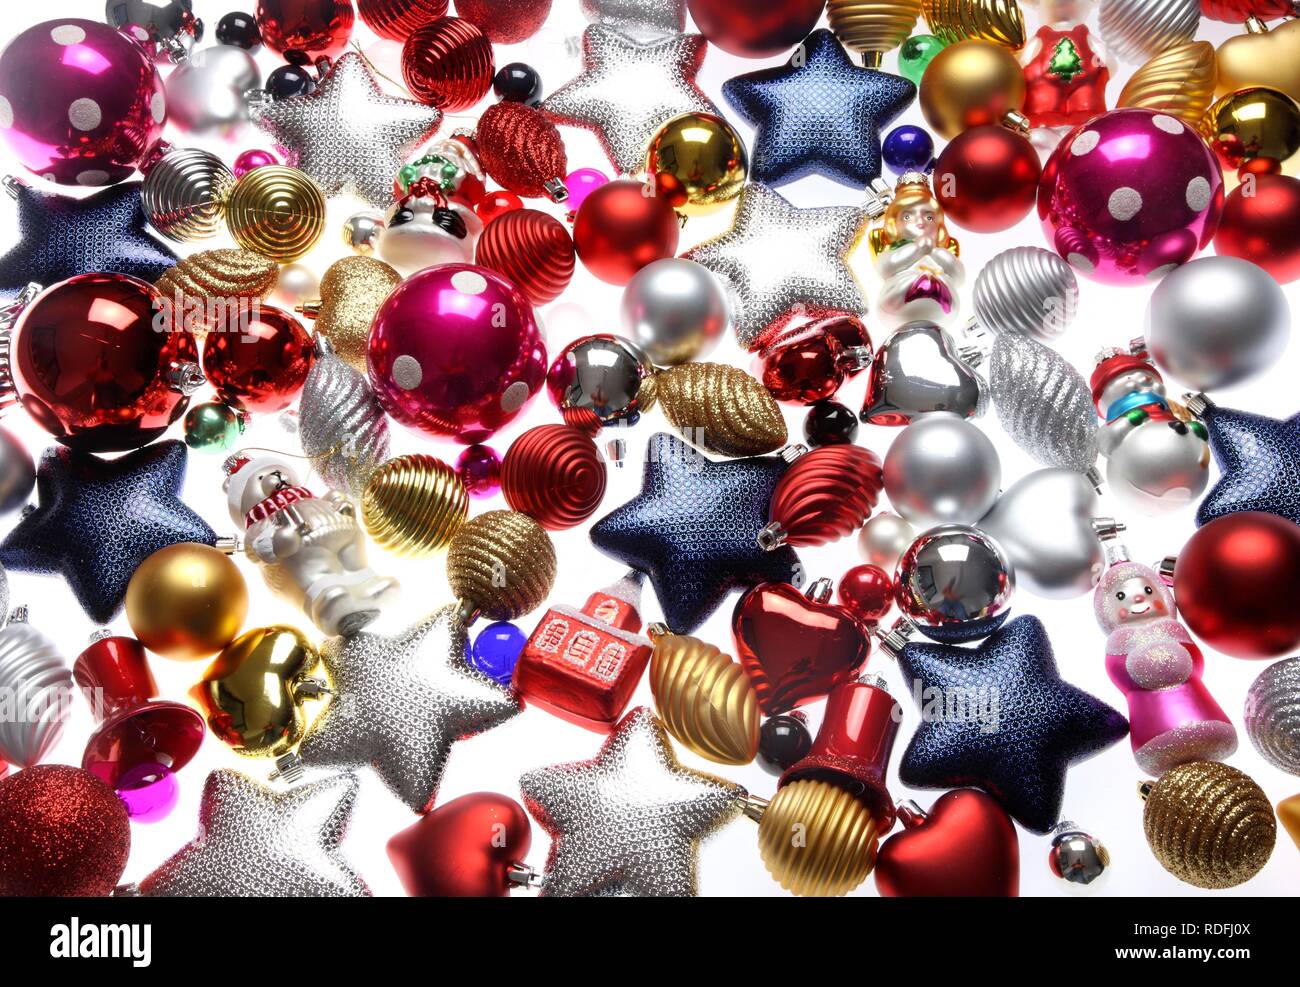 Weihnachtsschmuck, verschiedenen Christbaum Kugeln, Kugeln Stockfoto